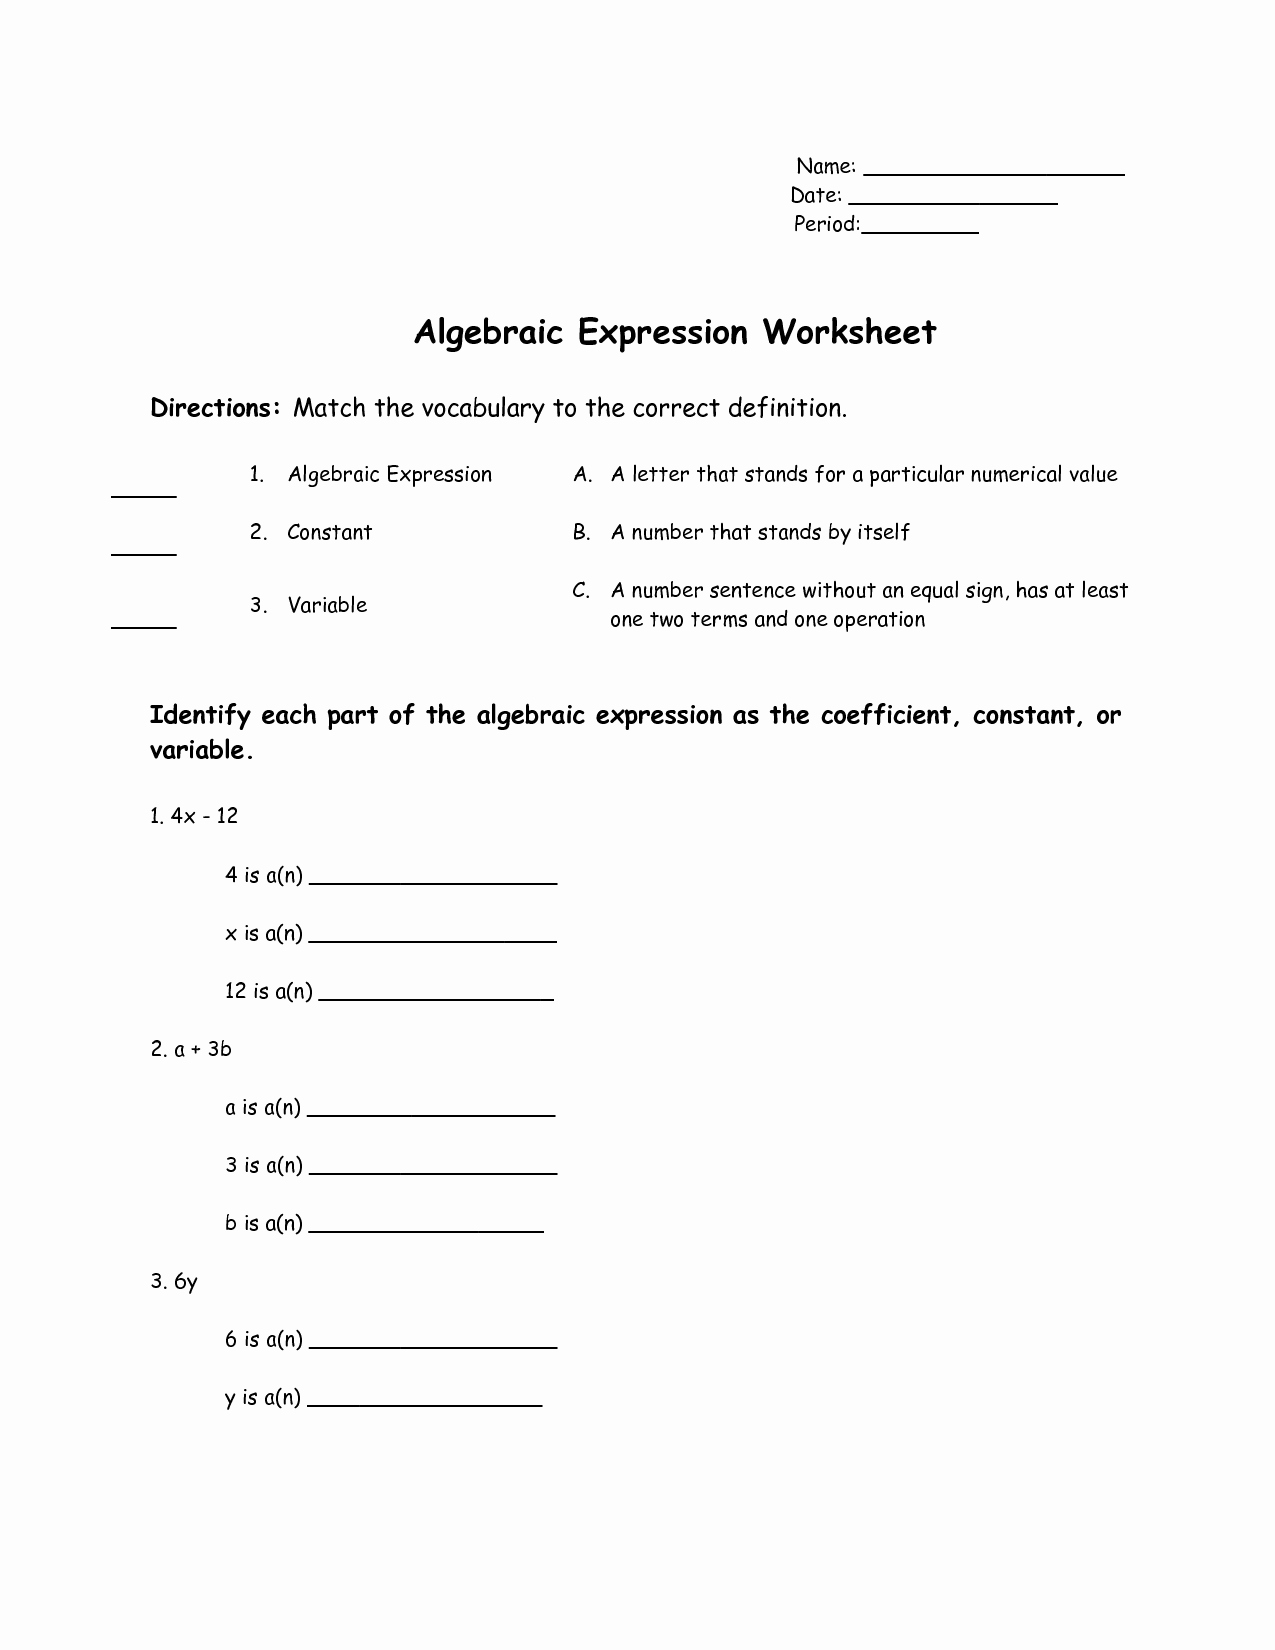 50 Writing Algebraic Expressions Worksheet